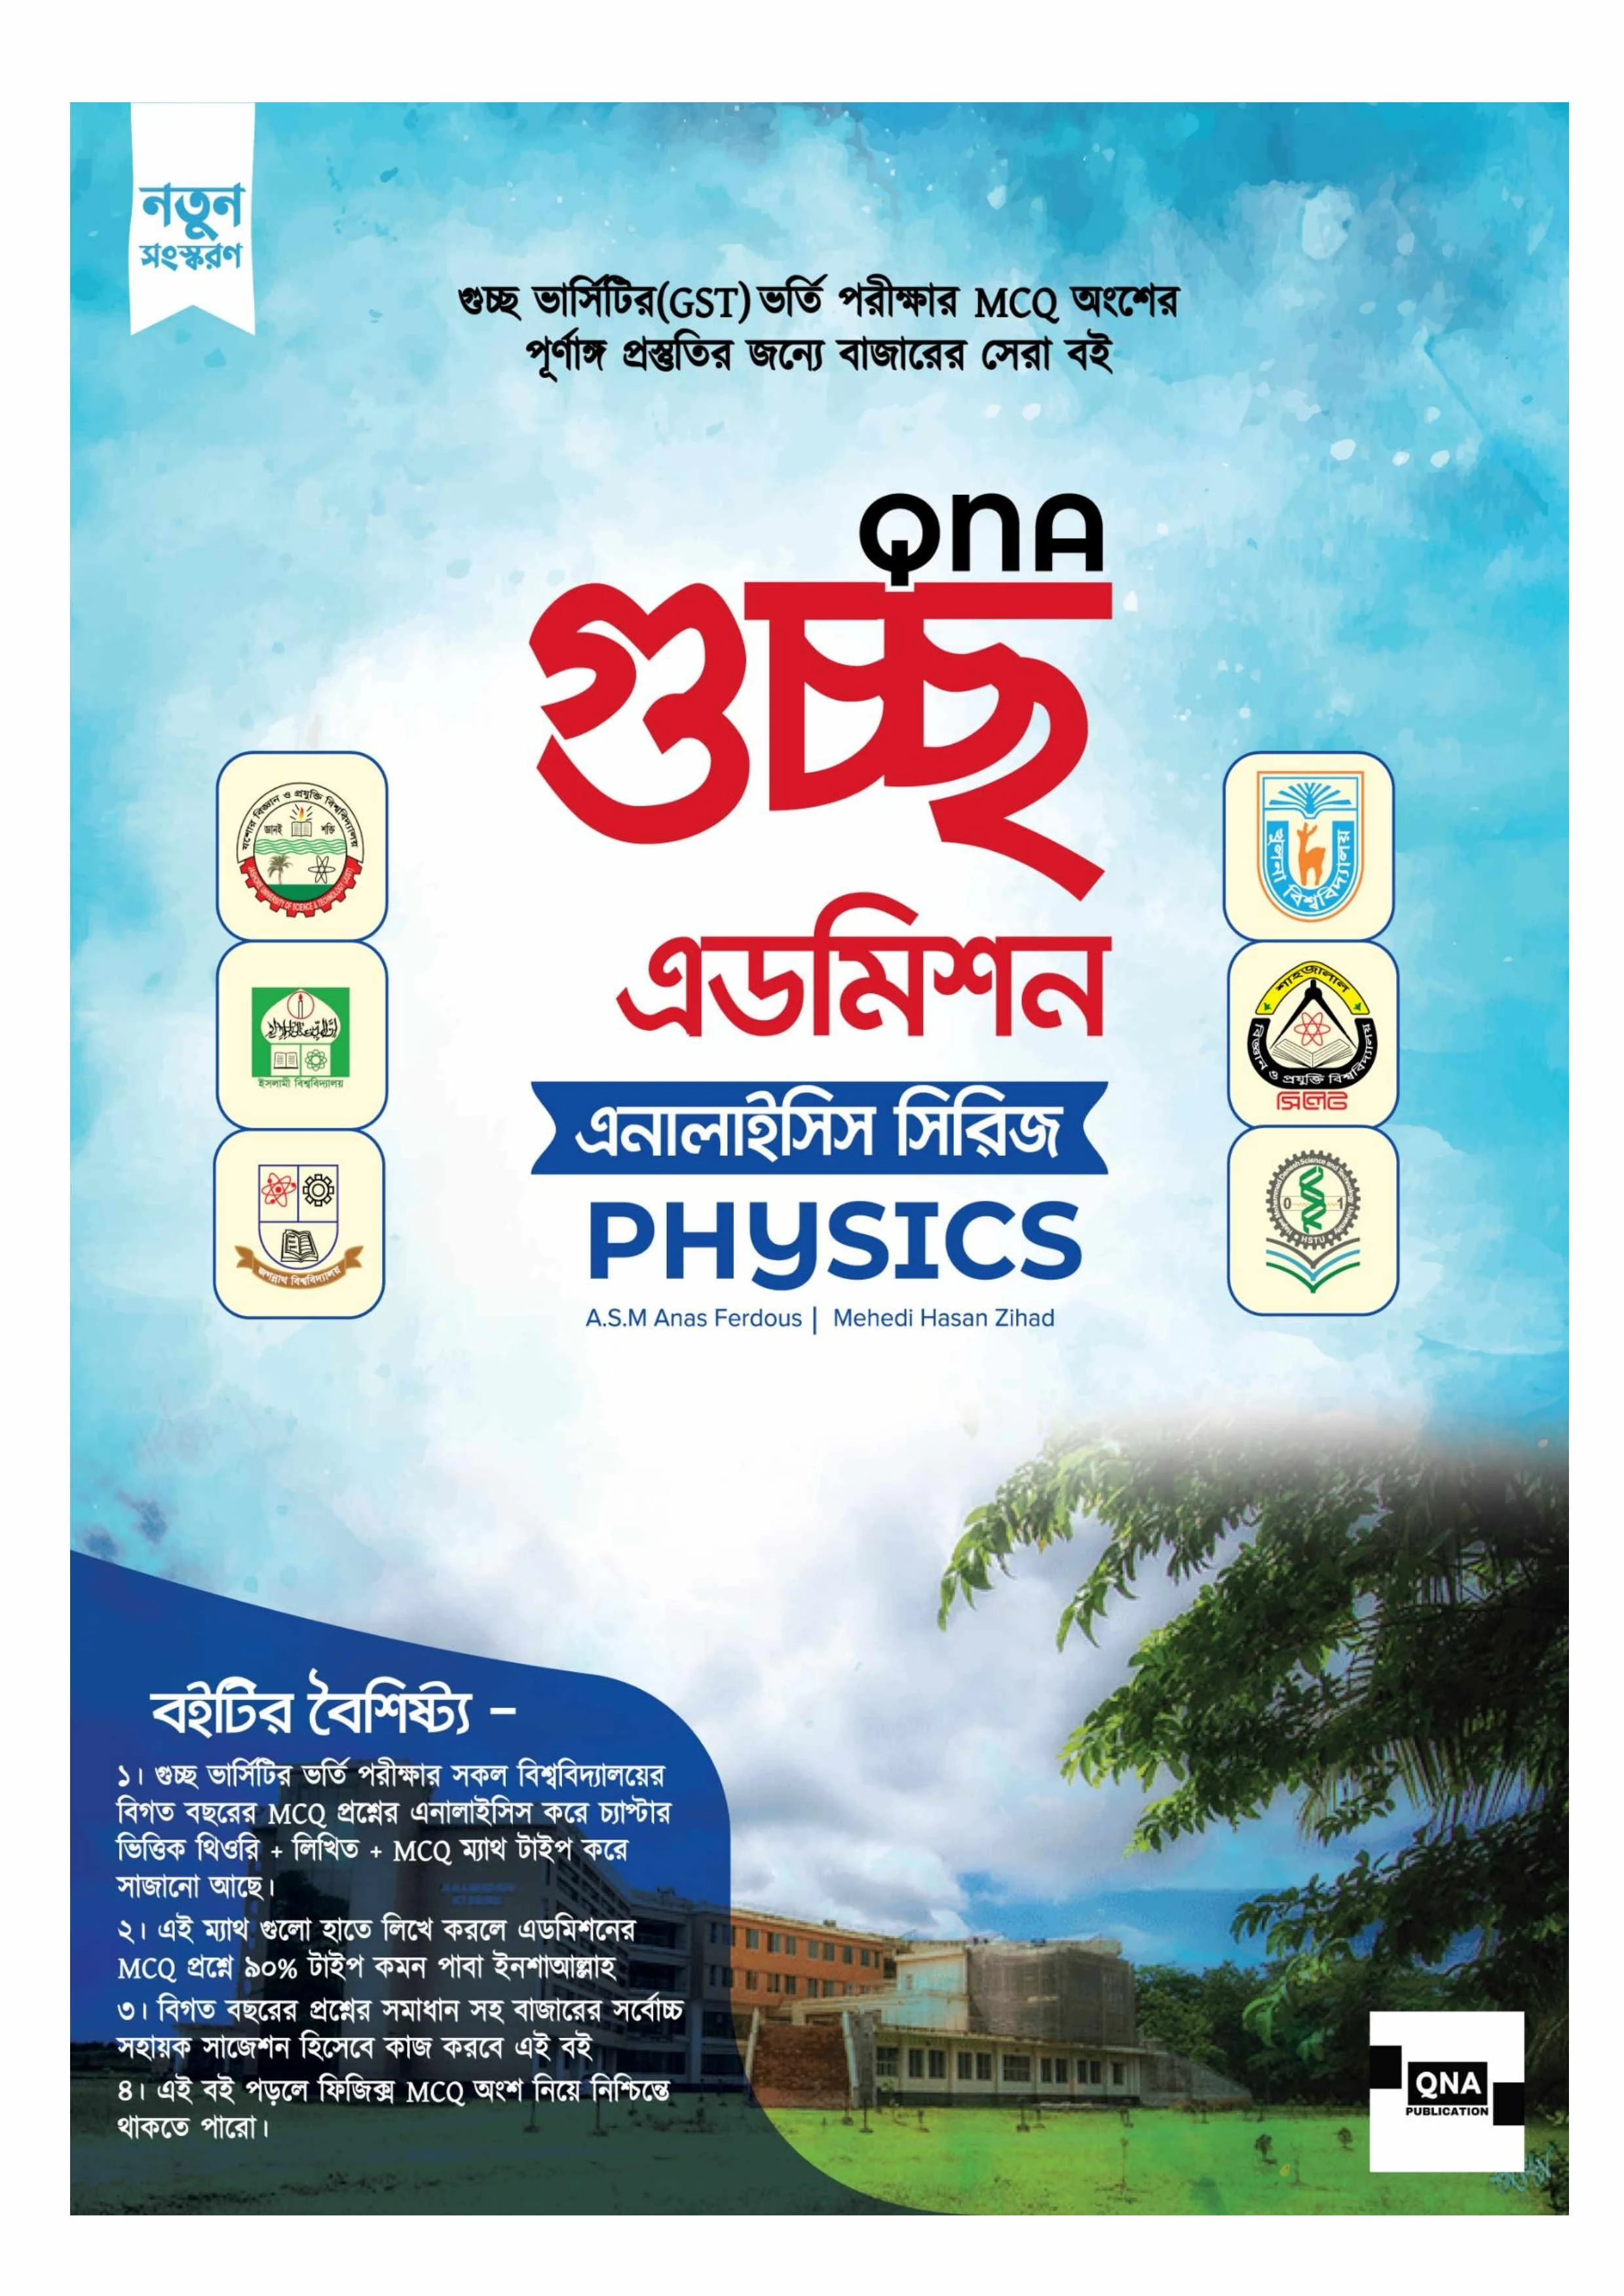 Qna gst admission analysis series Physics pdf download,QNA গুচ্ছ এডমিশন অ্যানালাইসিস সিরিজ Physics PDF